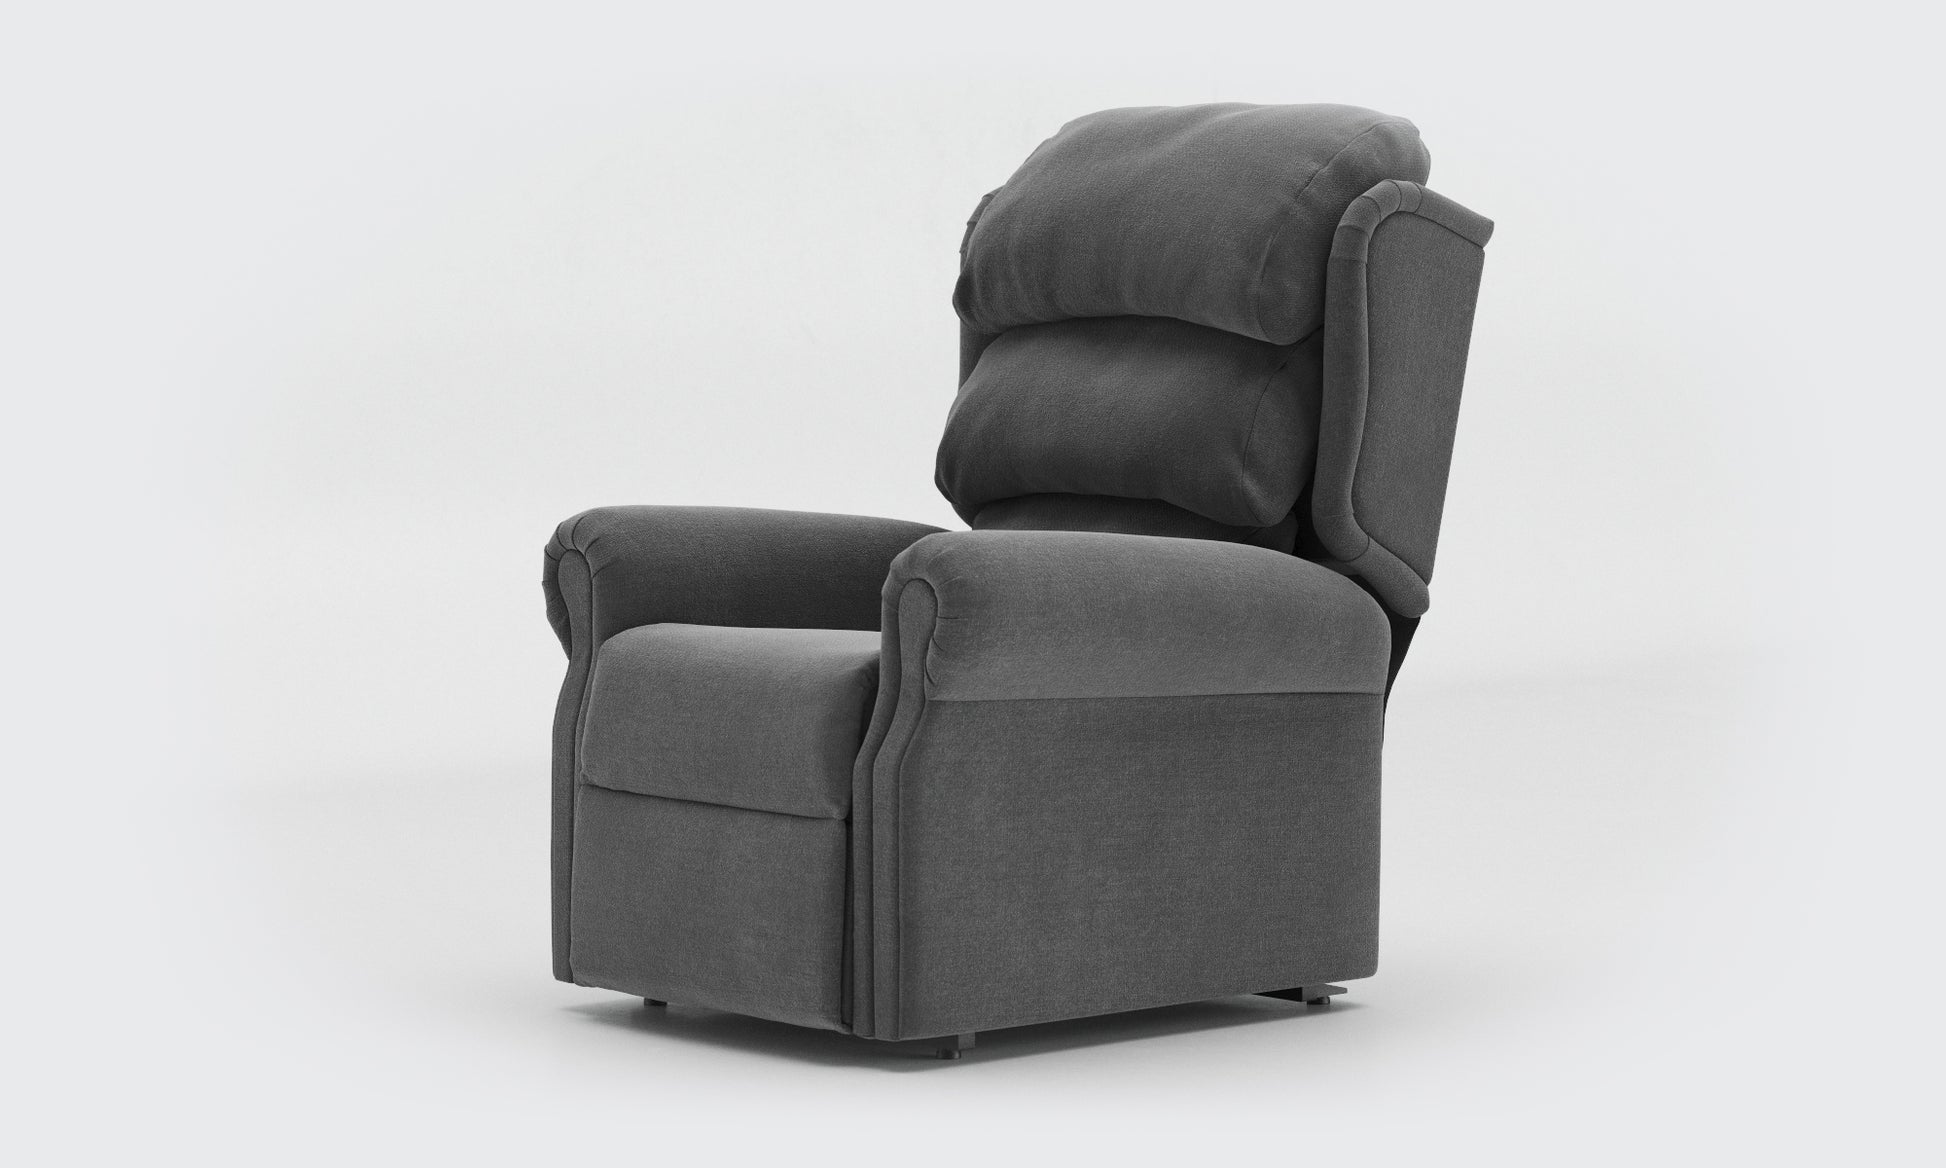 Adara Riser Recliner chair standard waterfall fabric anthracite